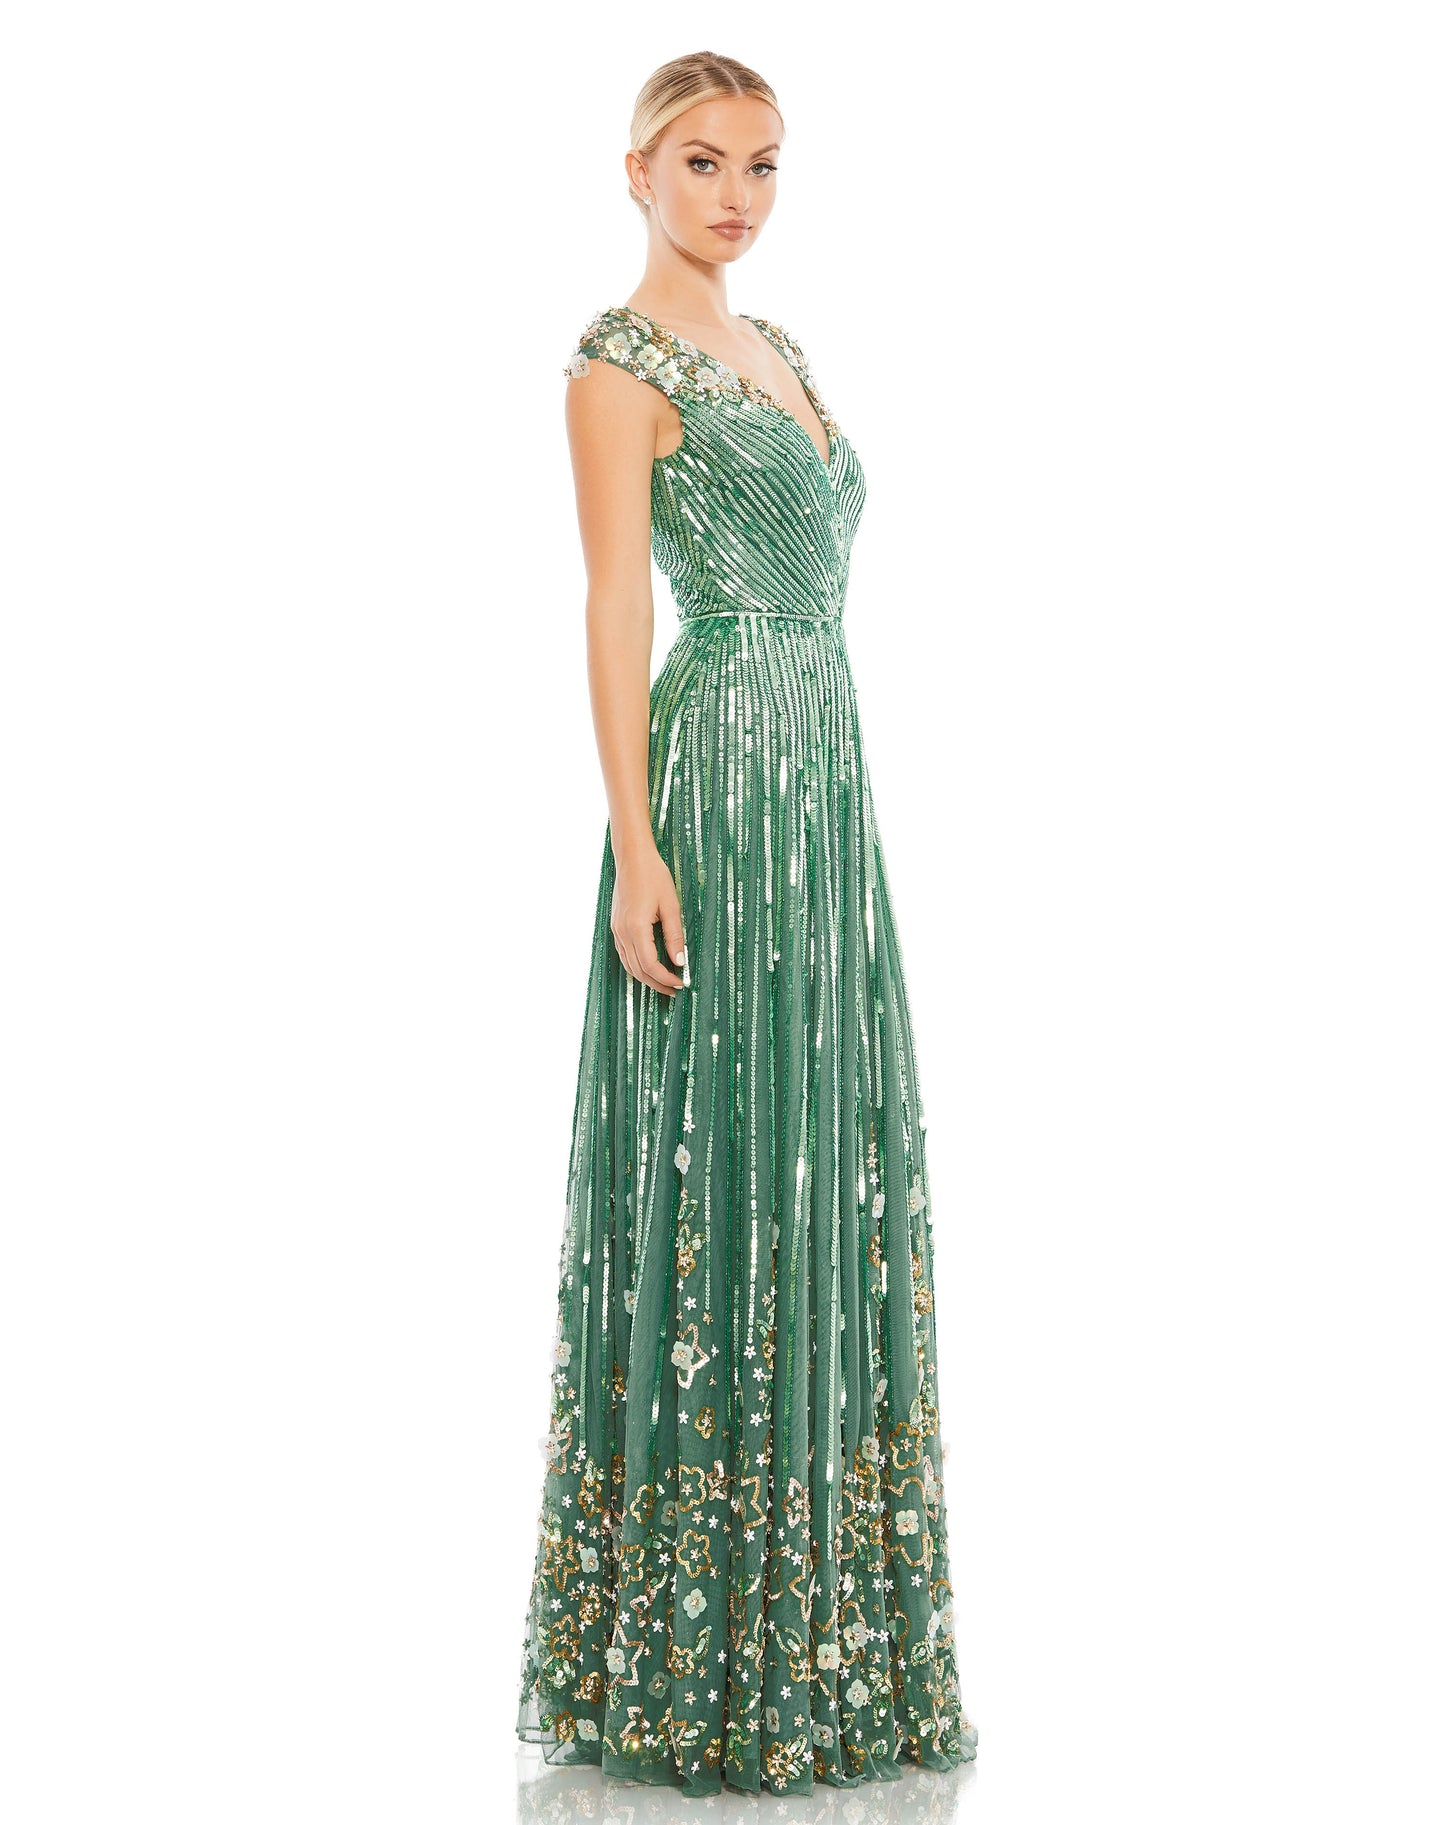 Sequin & Floral Embellished Evening Gown